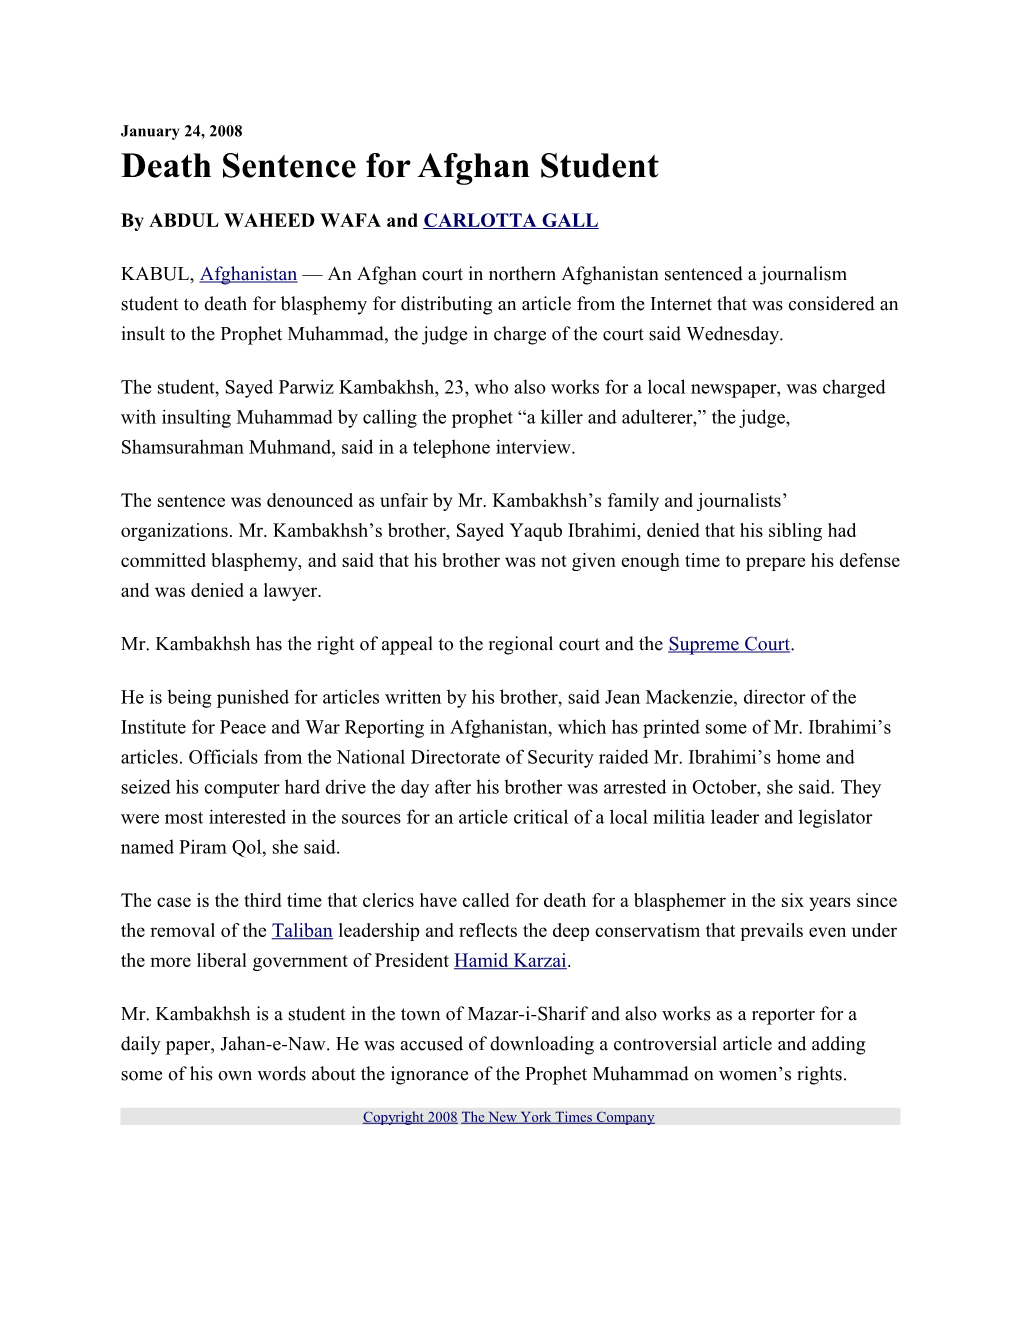 Death Sentence for Afghan Student